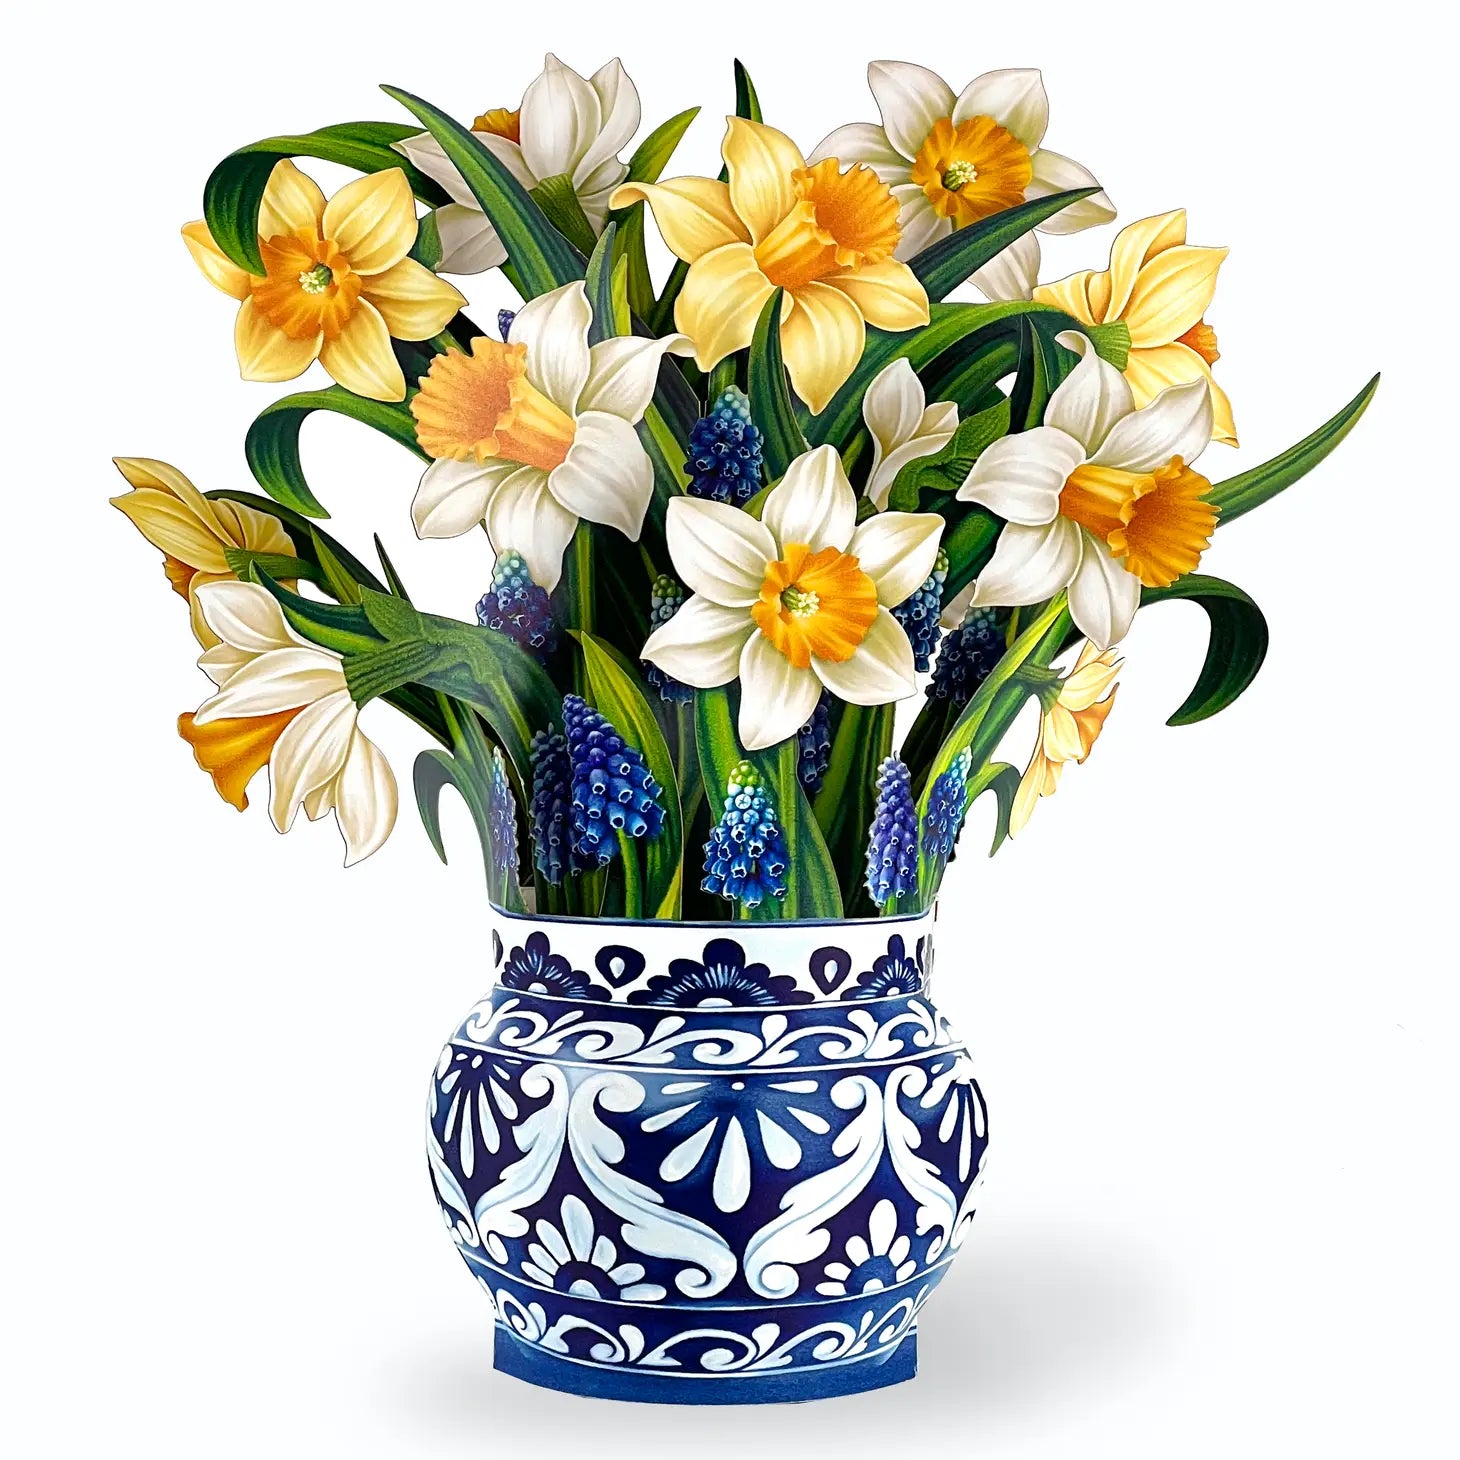 English Daffodils